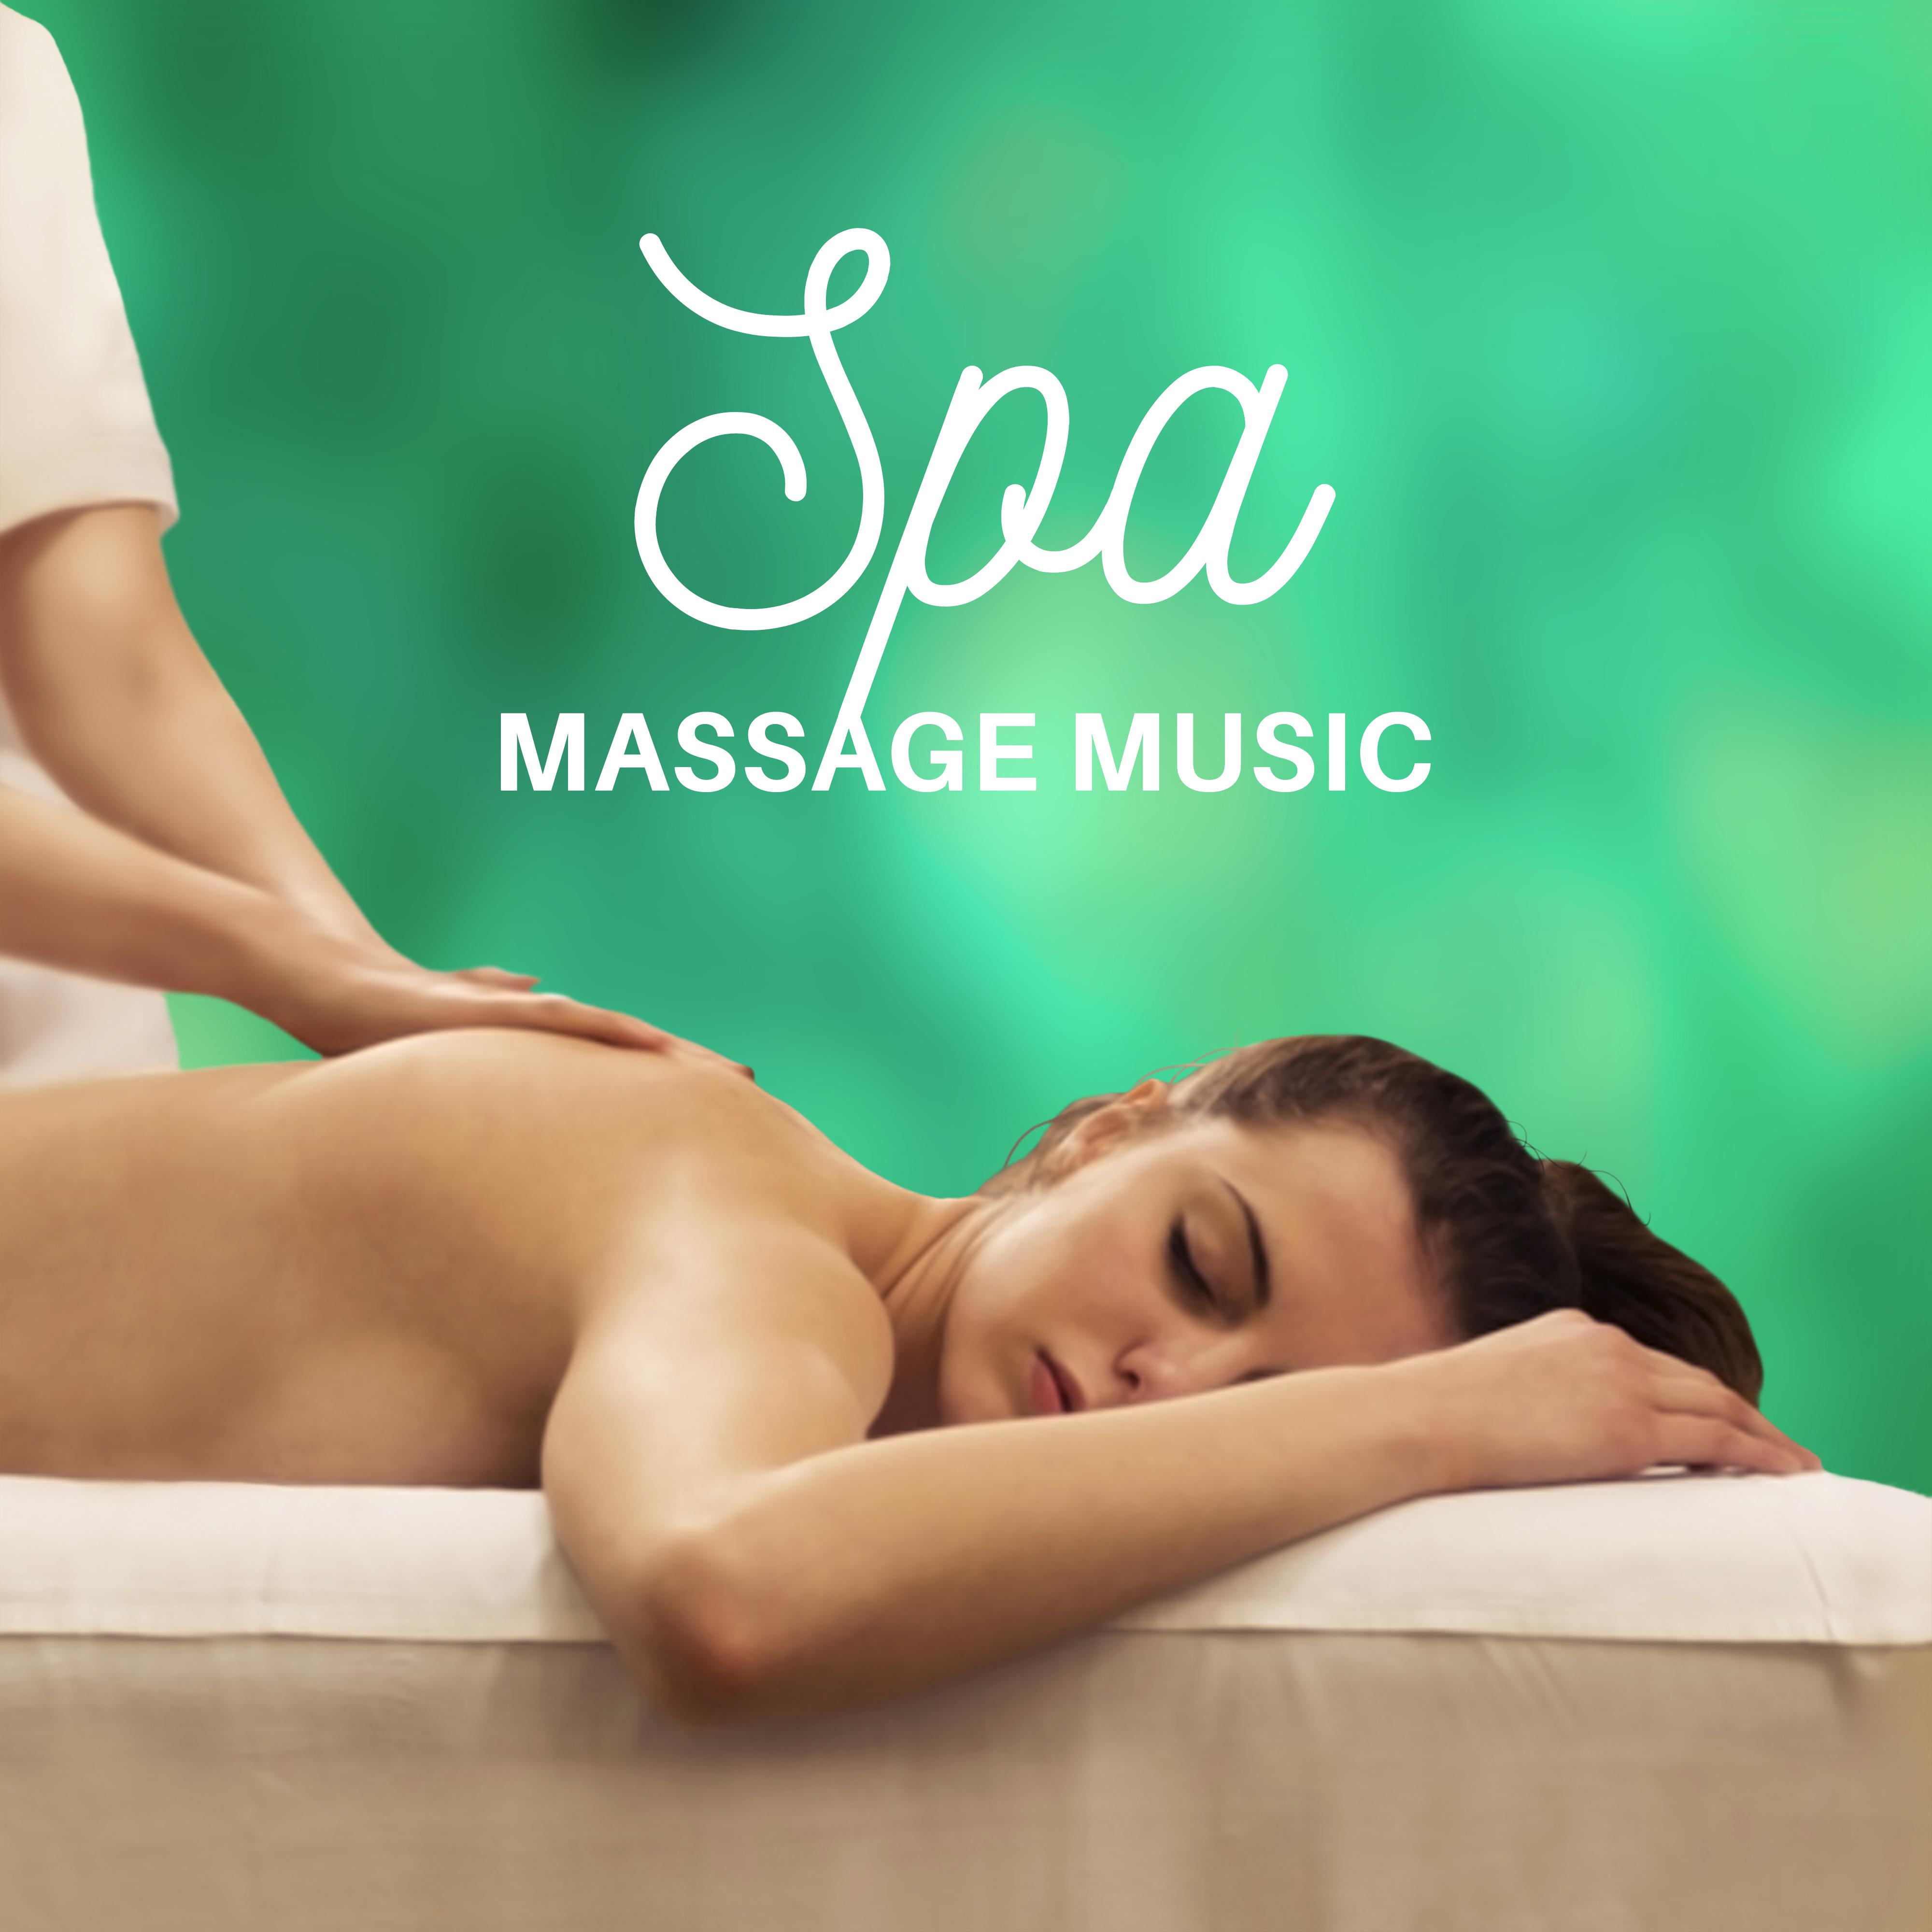 Spa Massage Music – Relaxing Waves, Healing Tides, Hot Stone Massage